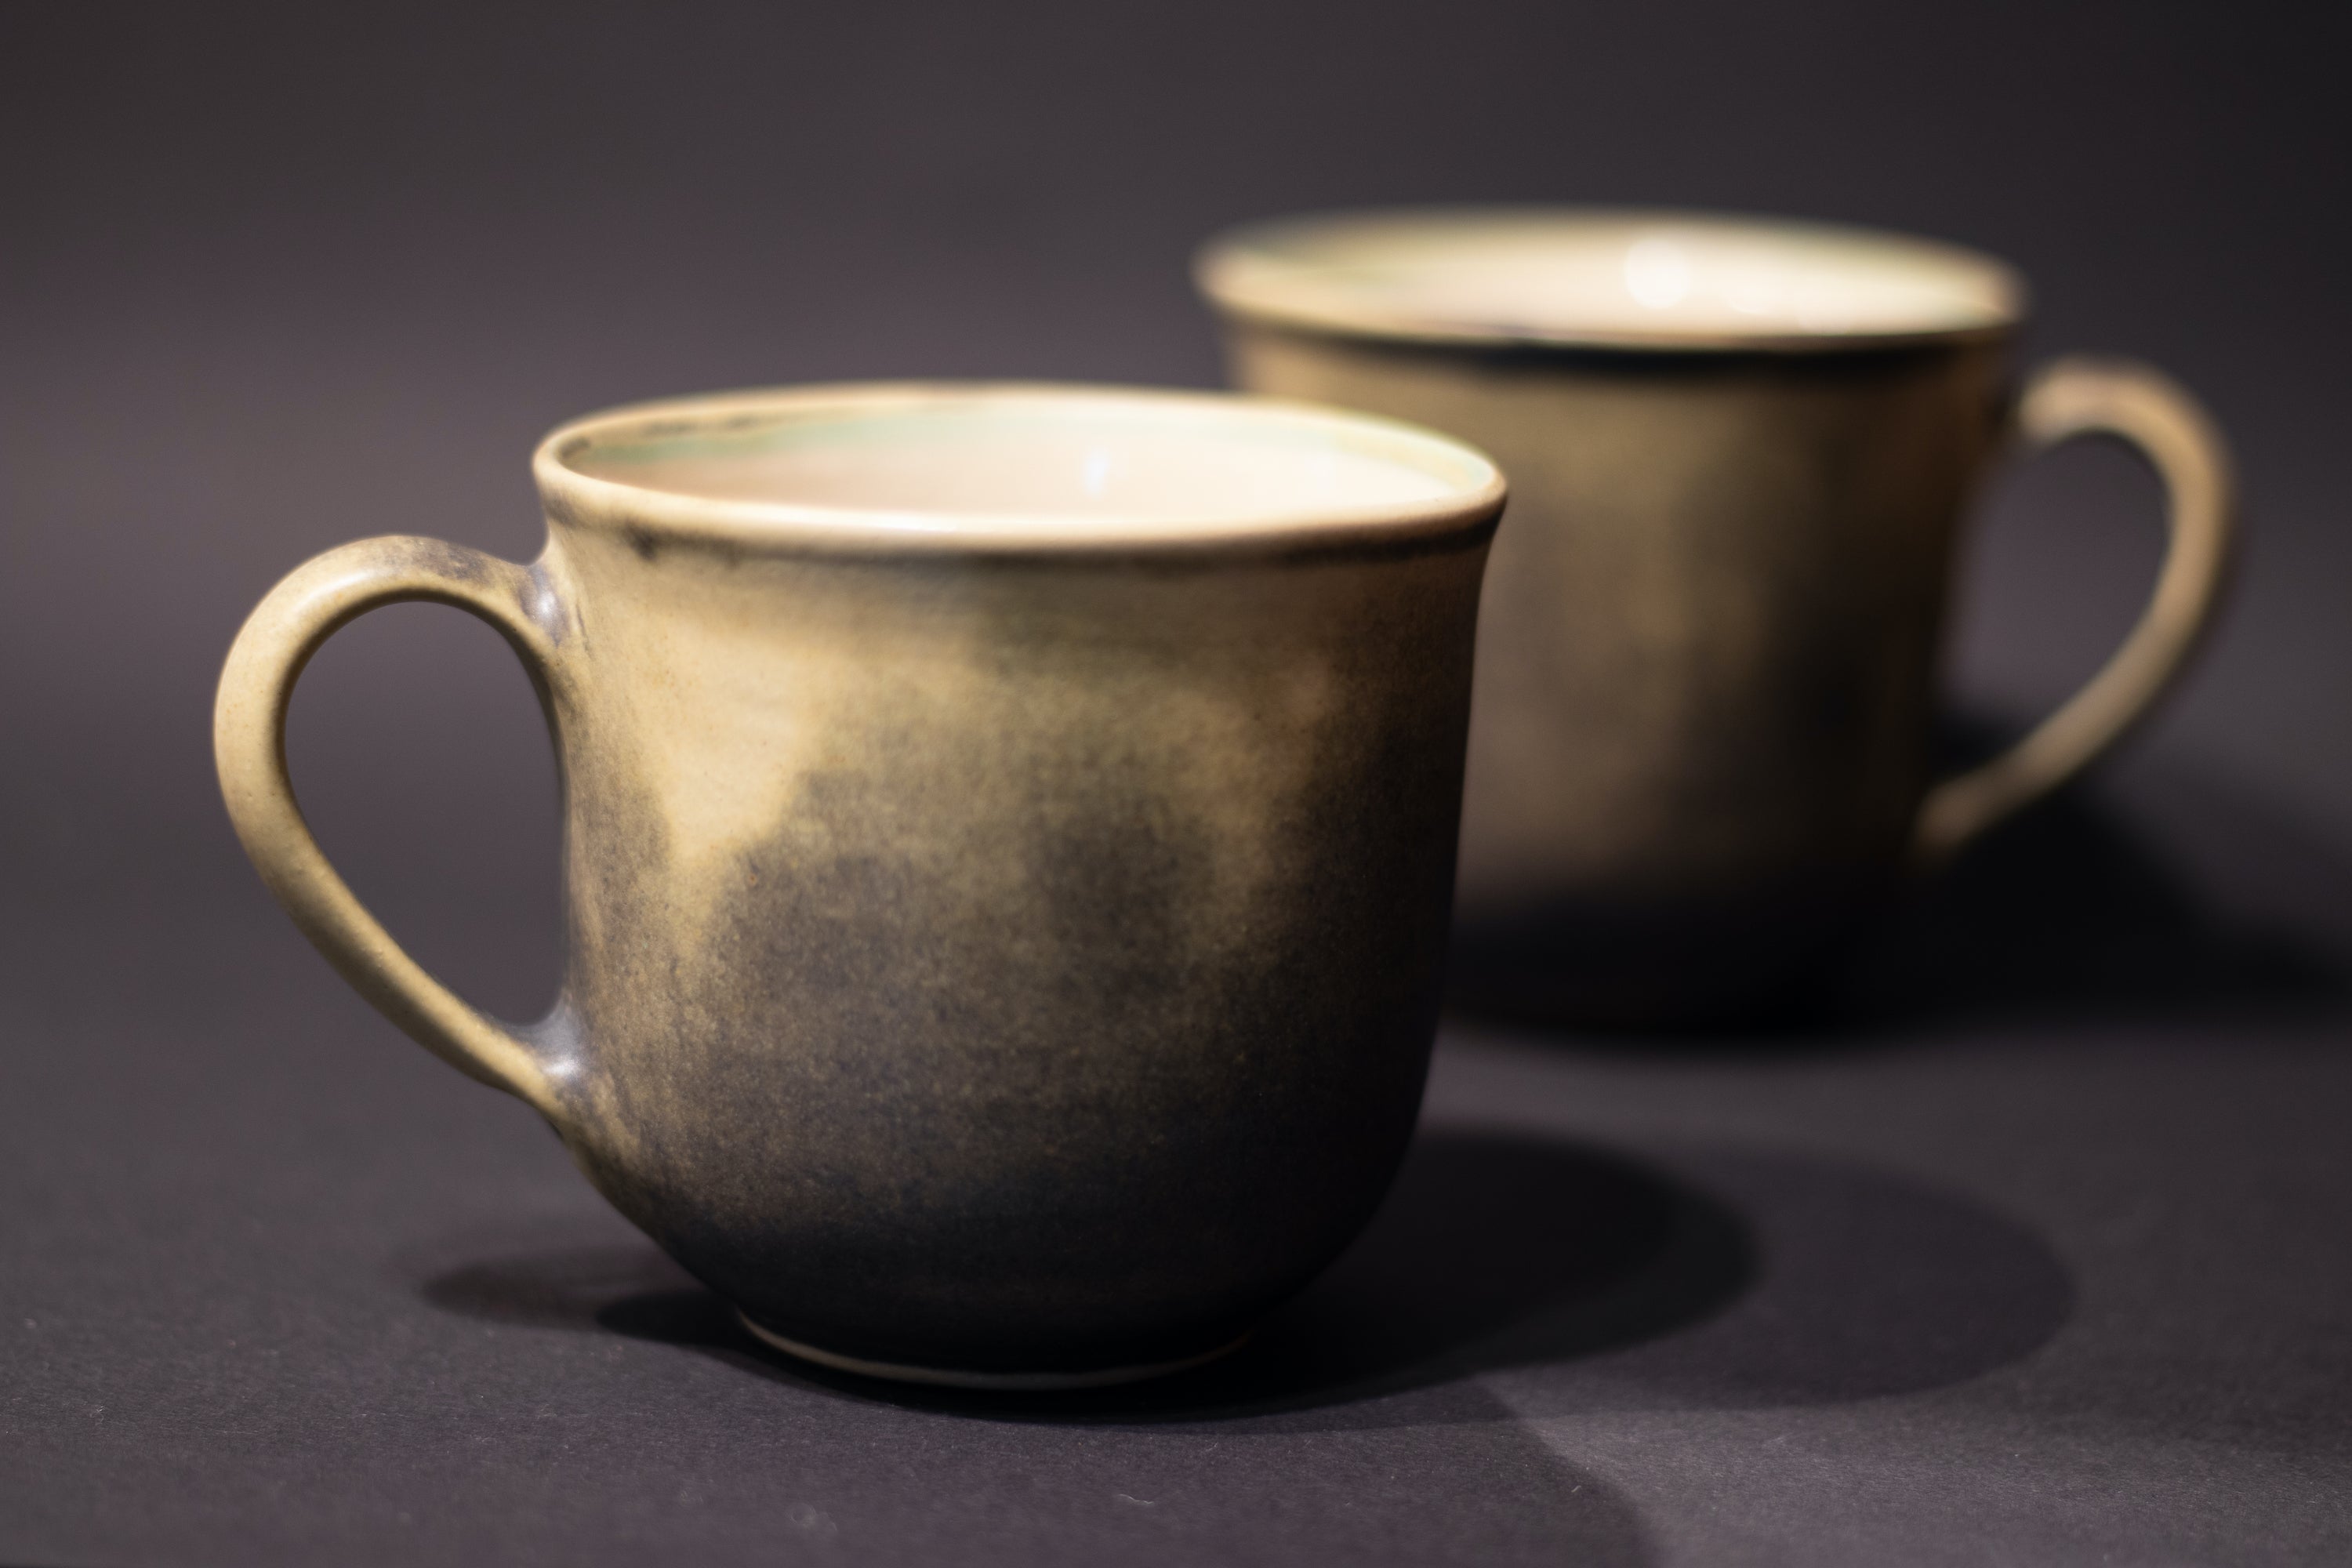 L Handmade ceramic mug with handle, gray